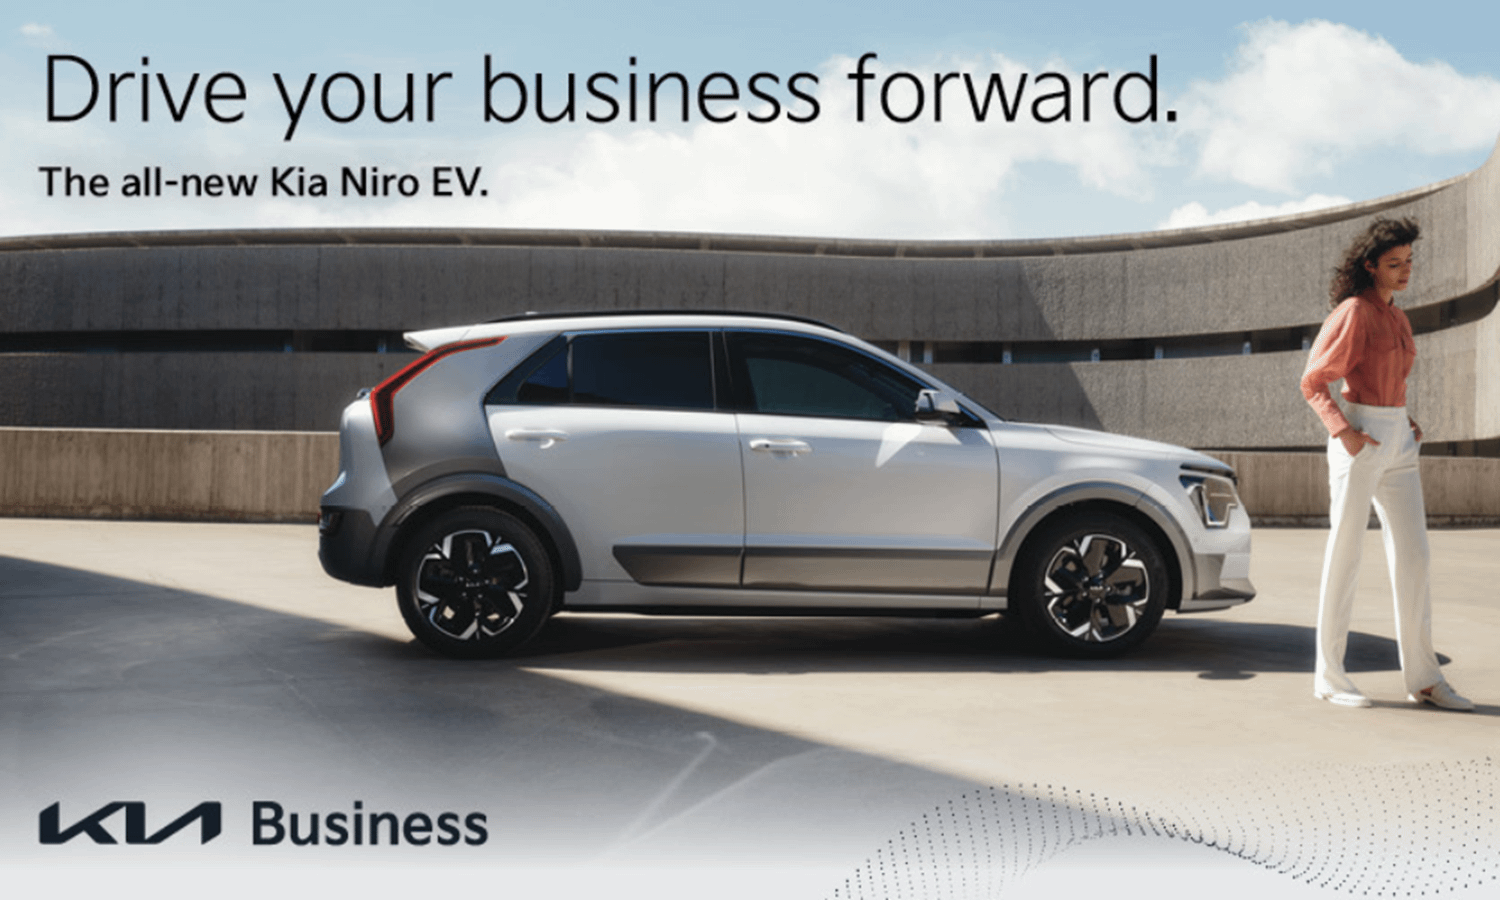 Kia Niro EV for business and fleet users